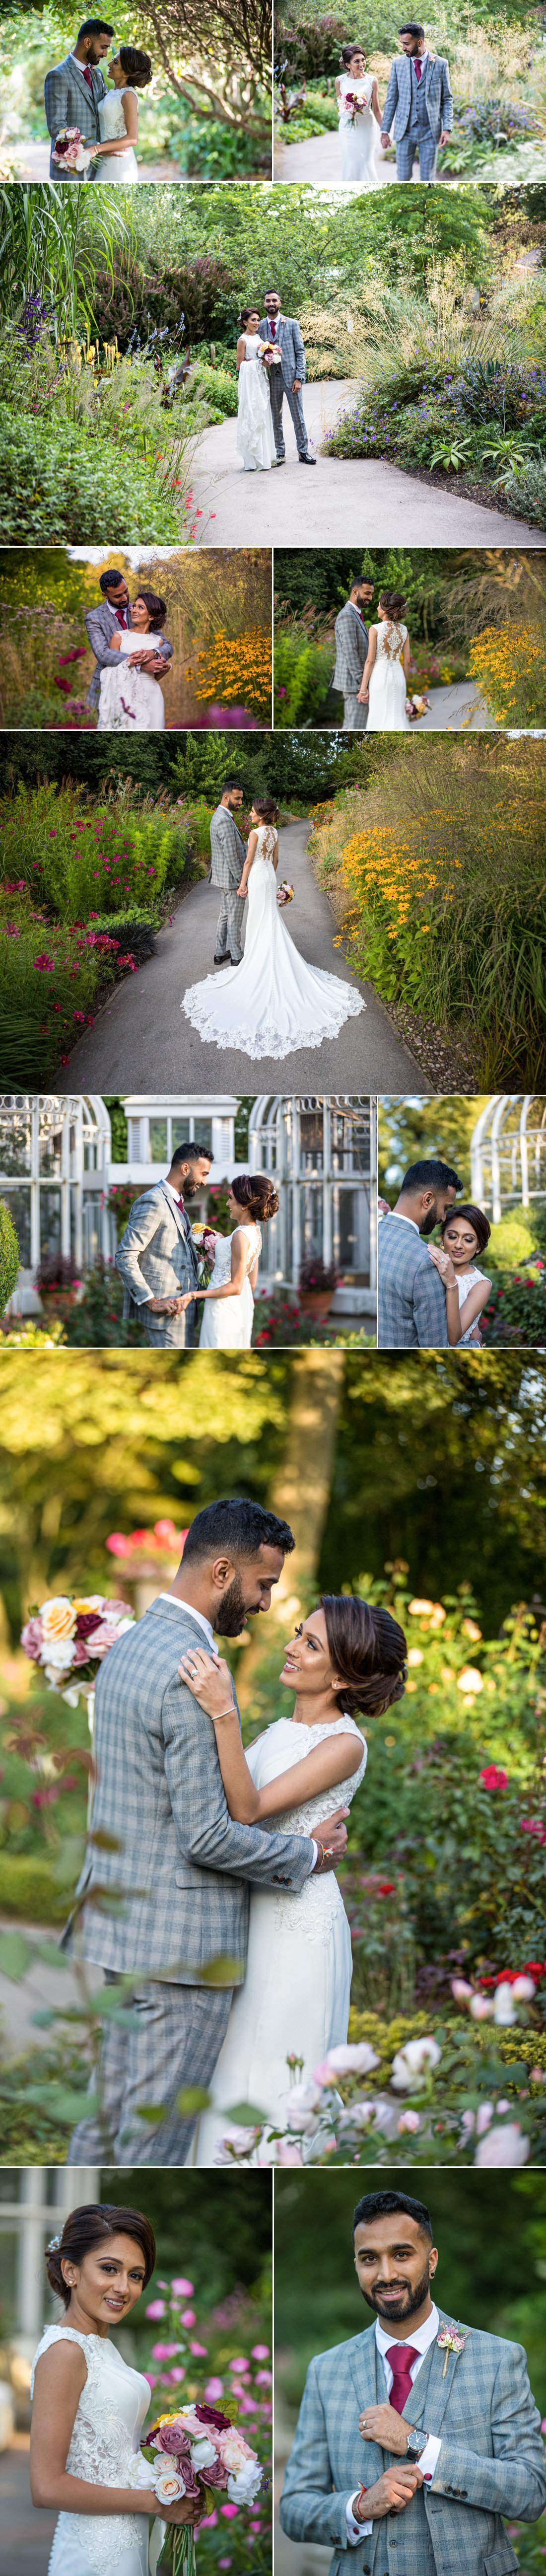 Civil wedding photography at Botannical Gardens 8 1